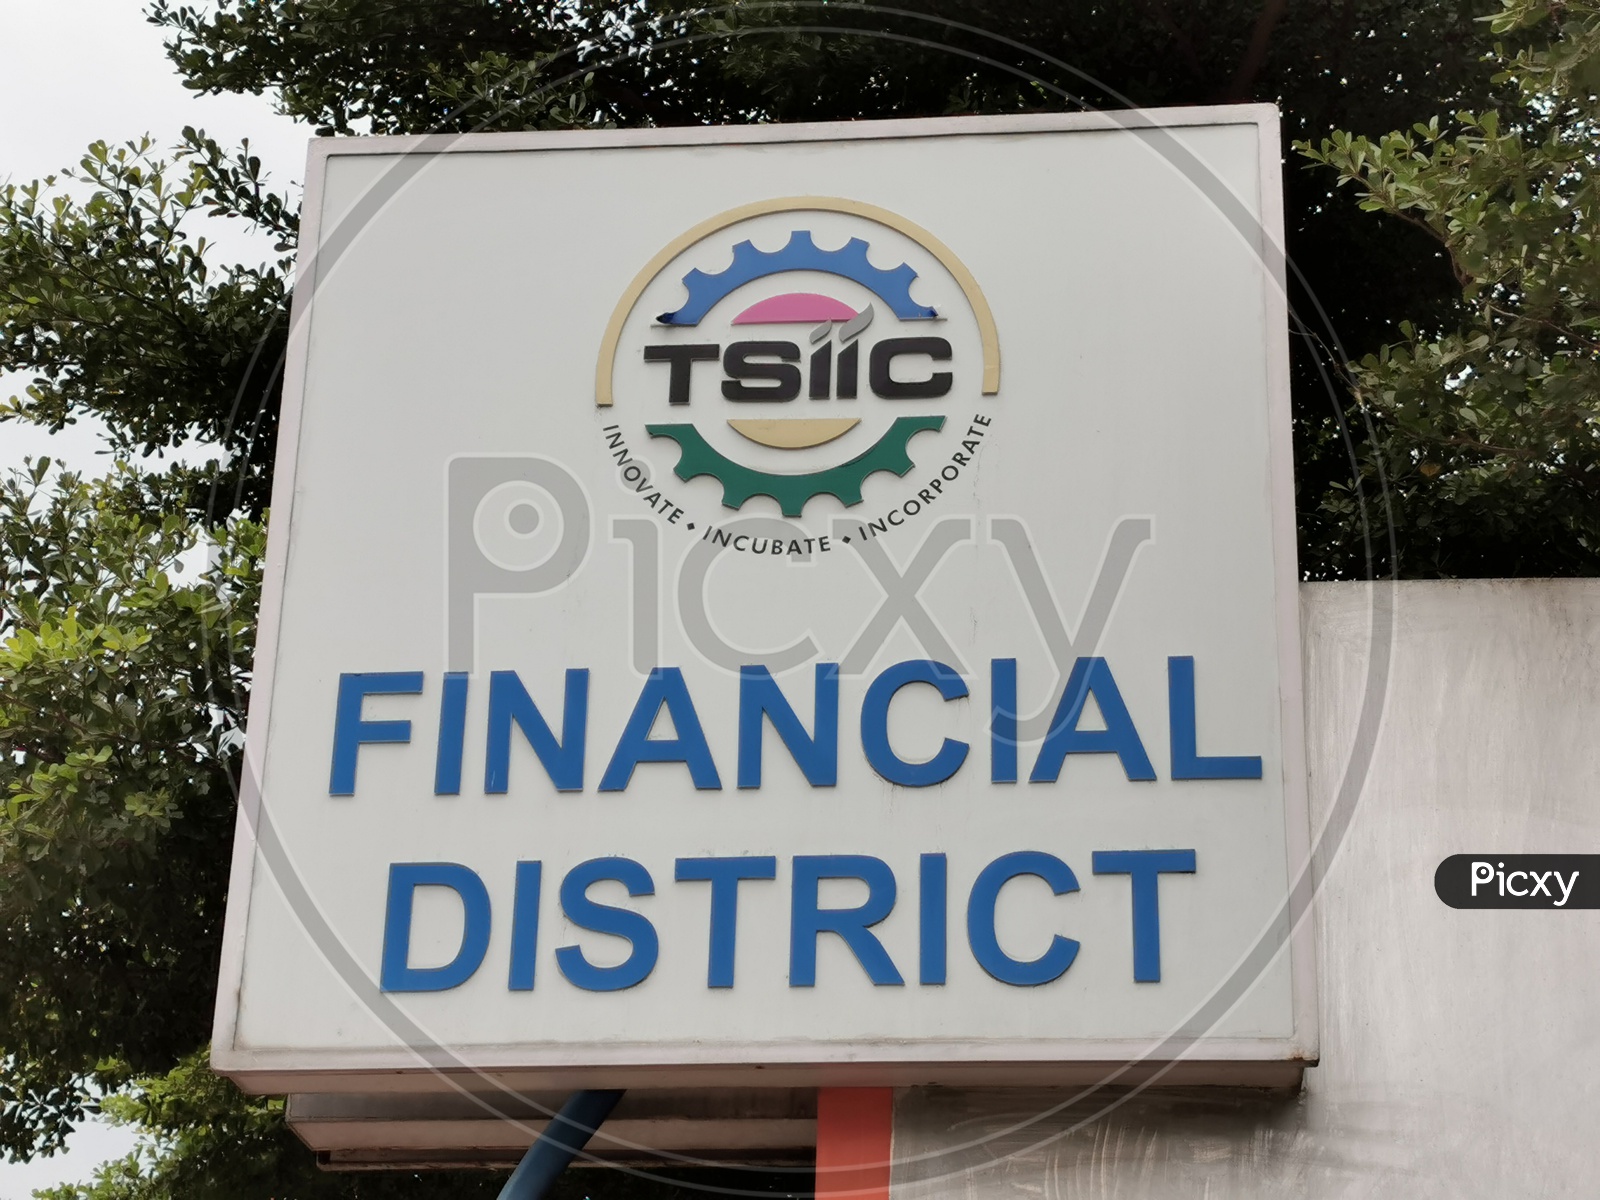 TSIIC Financial District Name Board